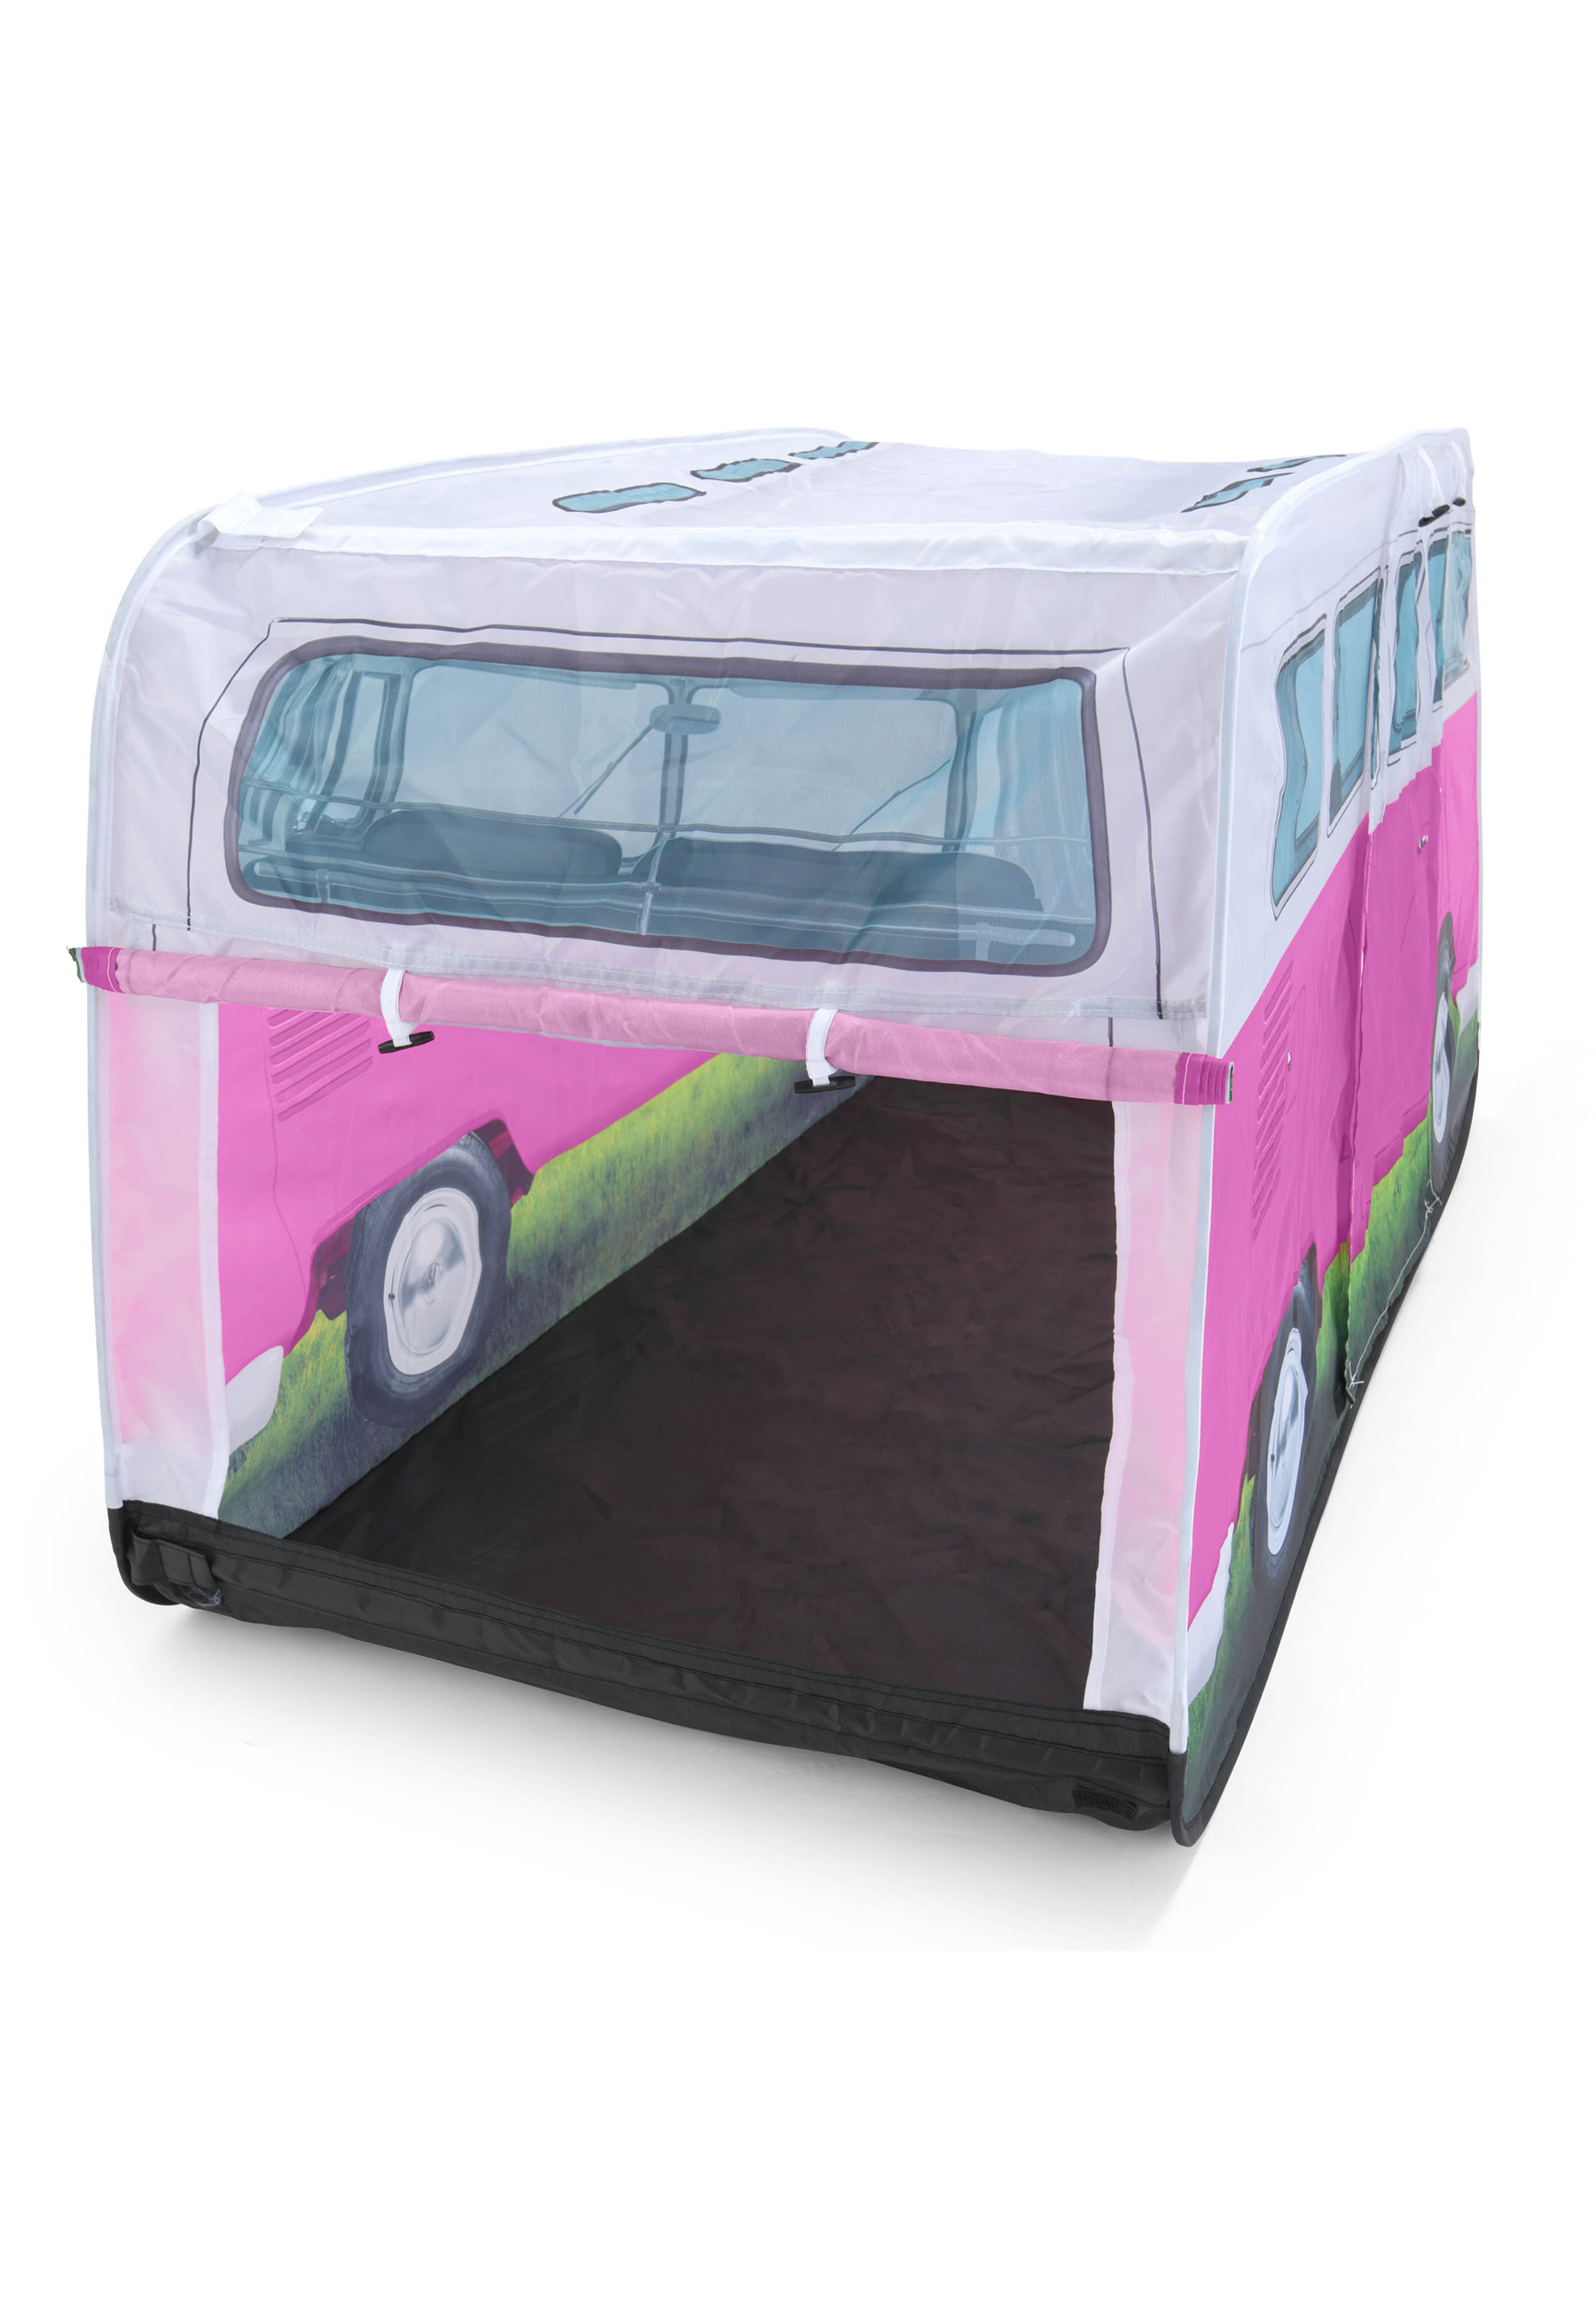 Tenda da gioco pop-up per bambini VW T1 Bulli Bus